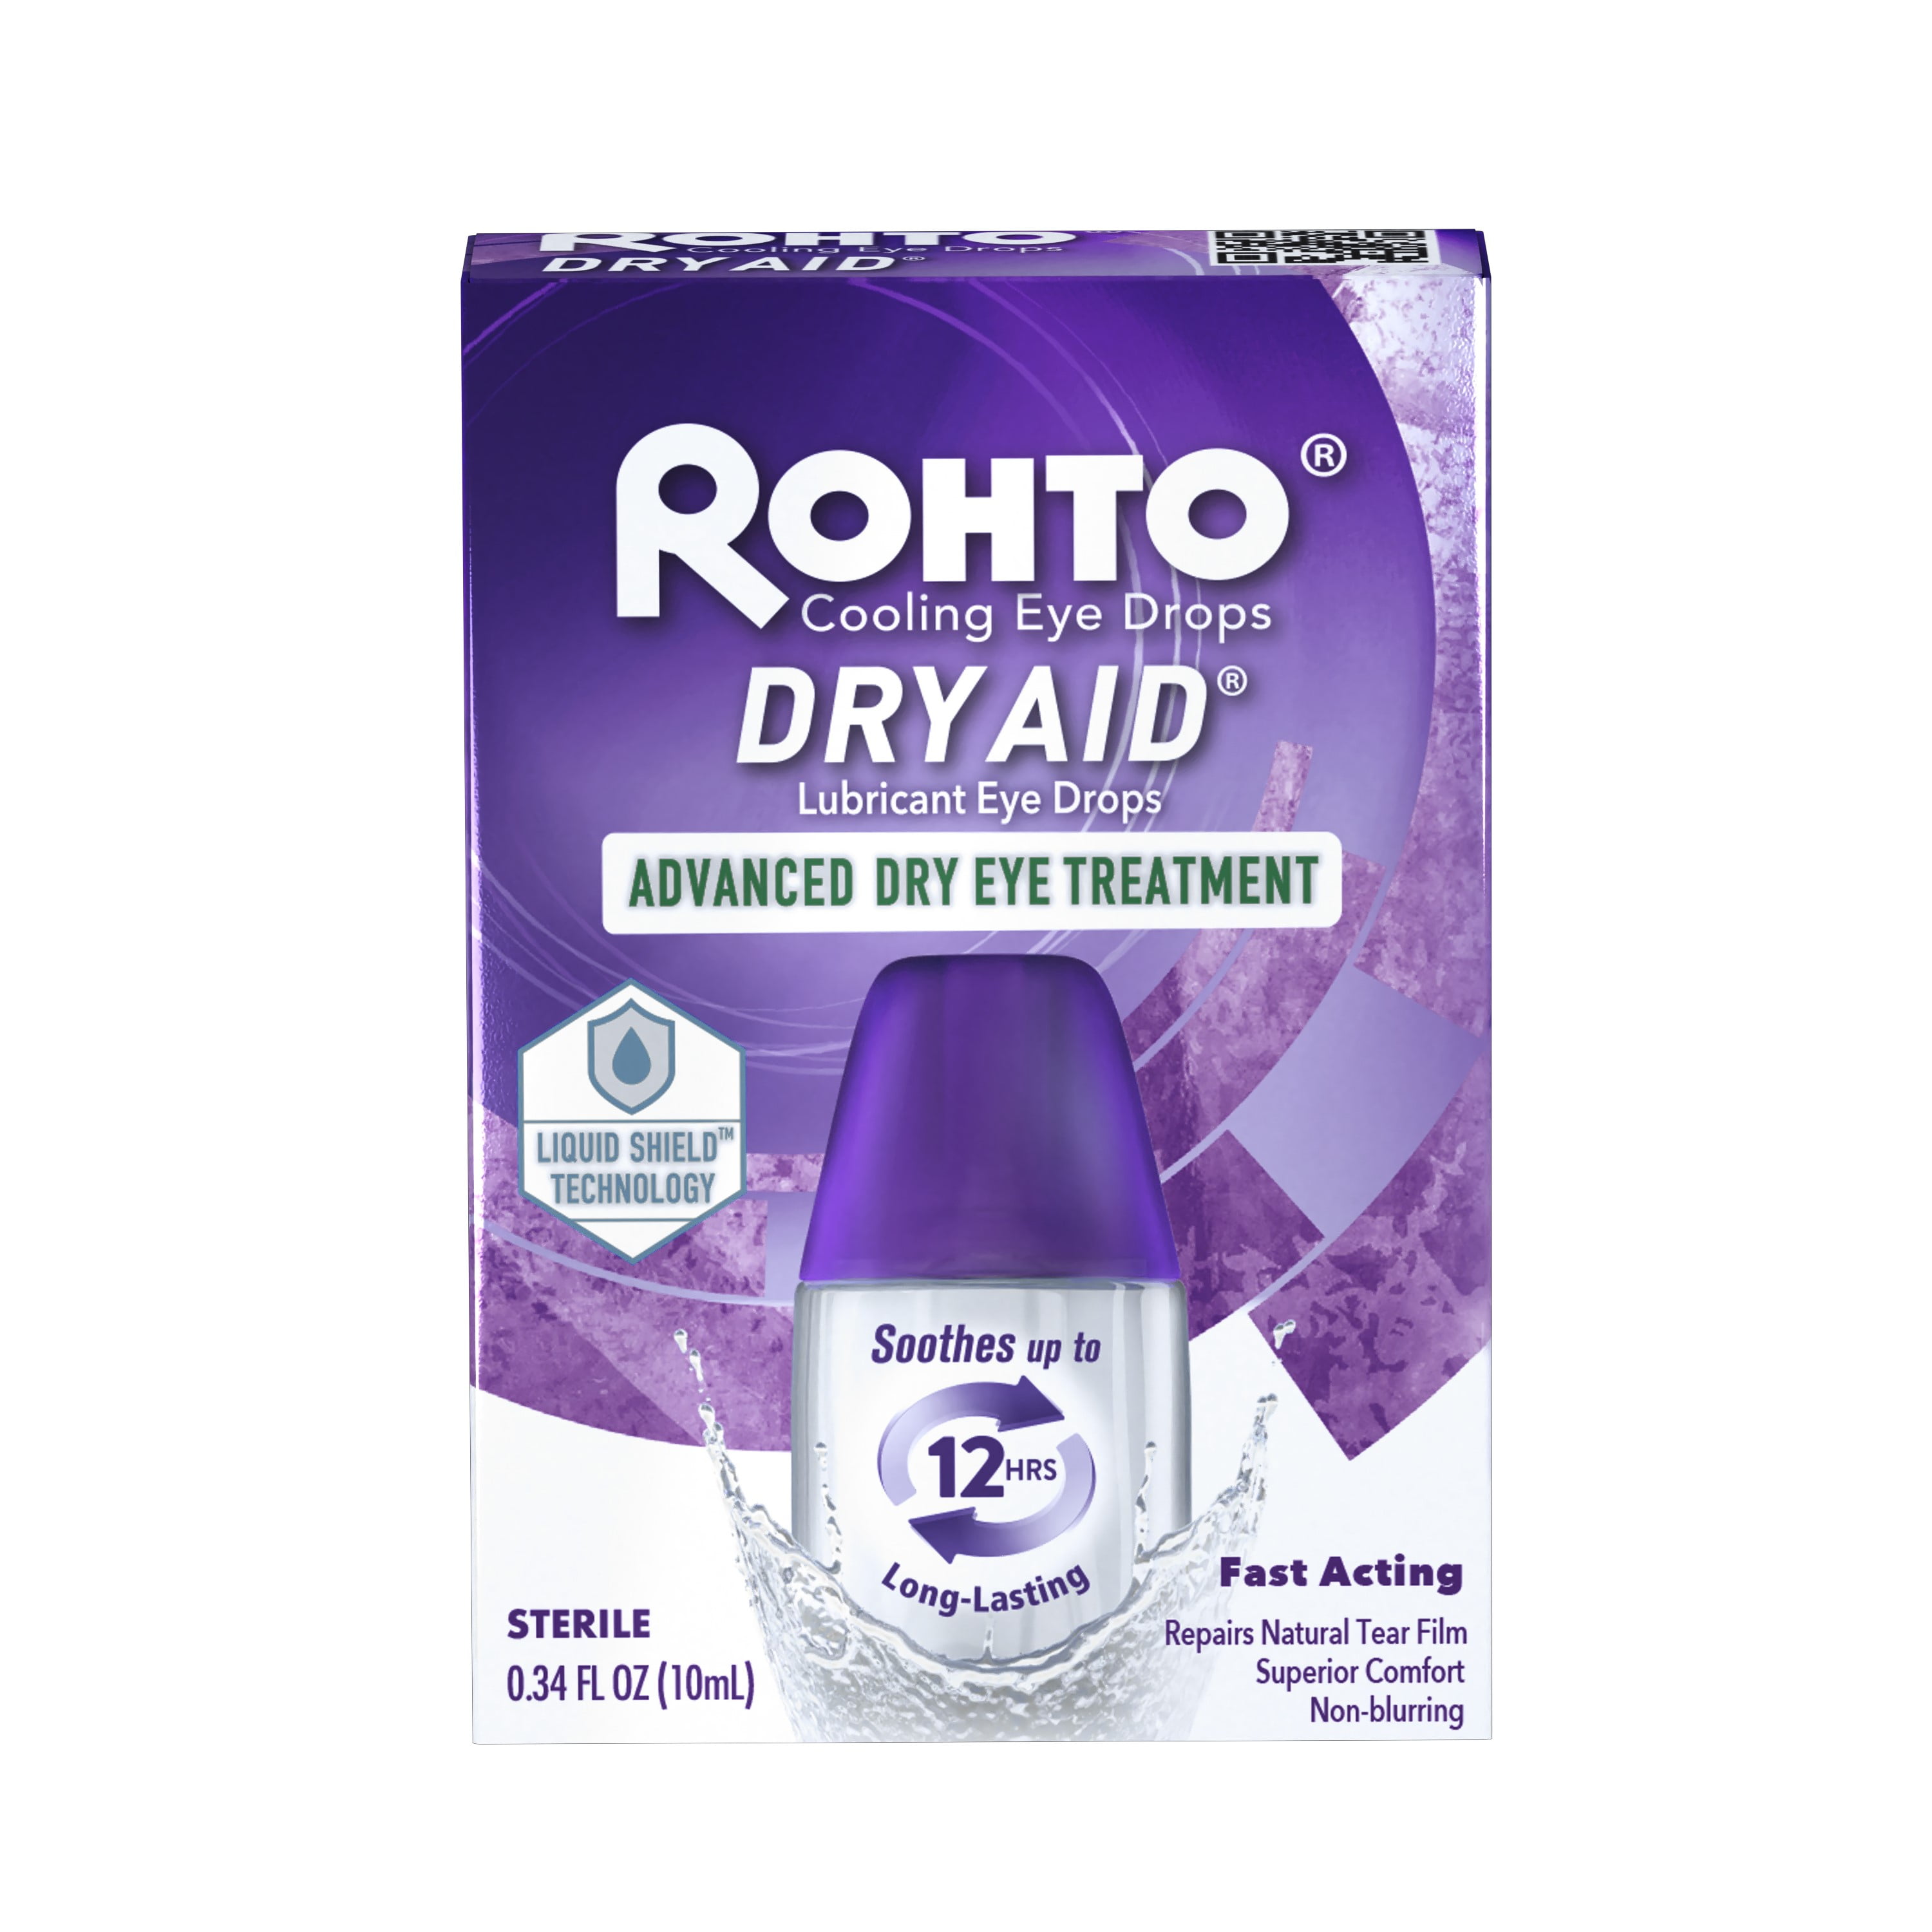 HYLO DUAL Hylo-Protect EYE DROPS 10ml moisturizing Dry Eye Allergy